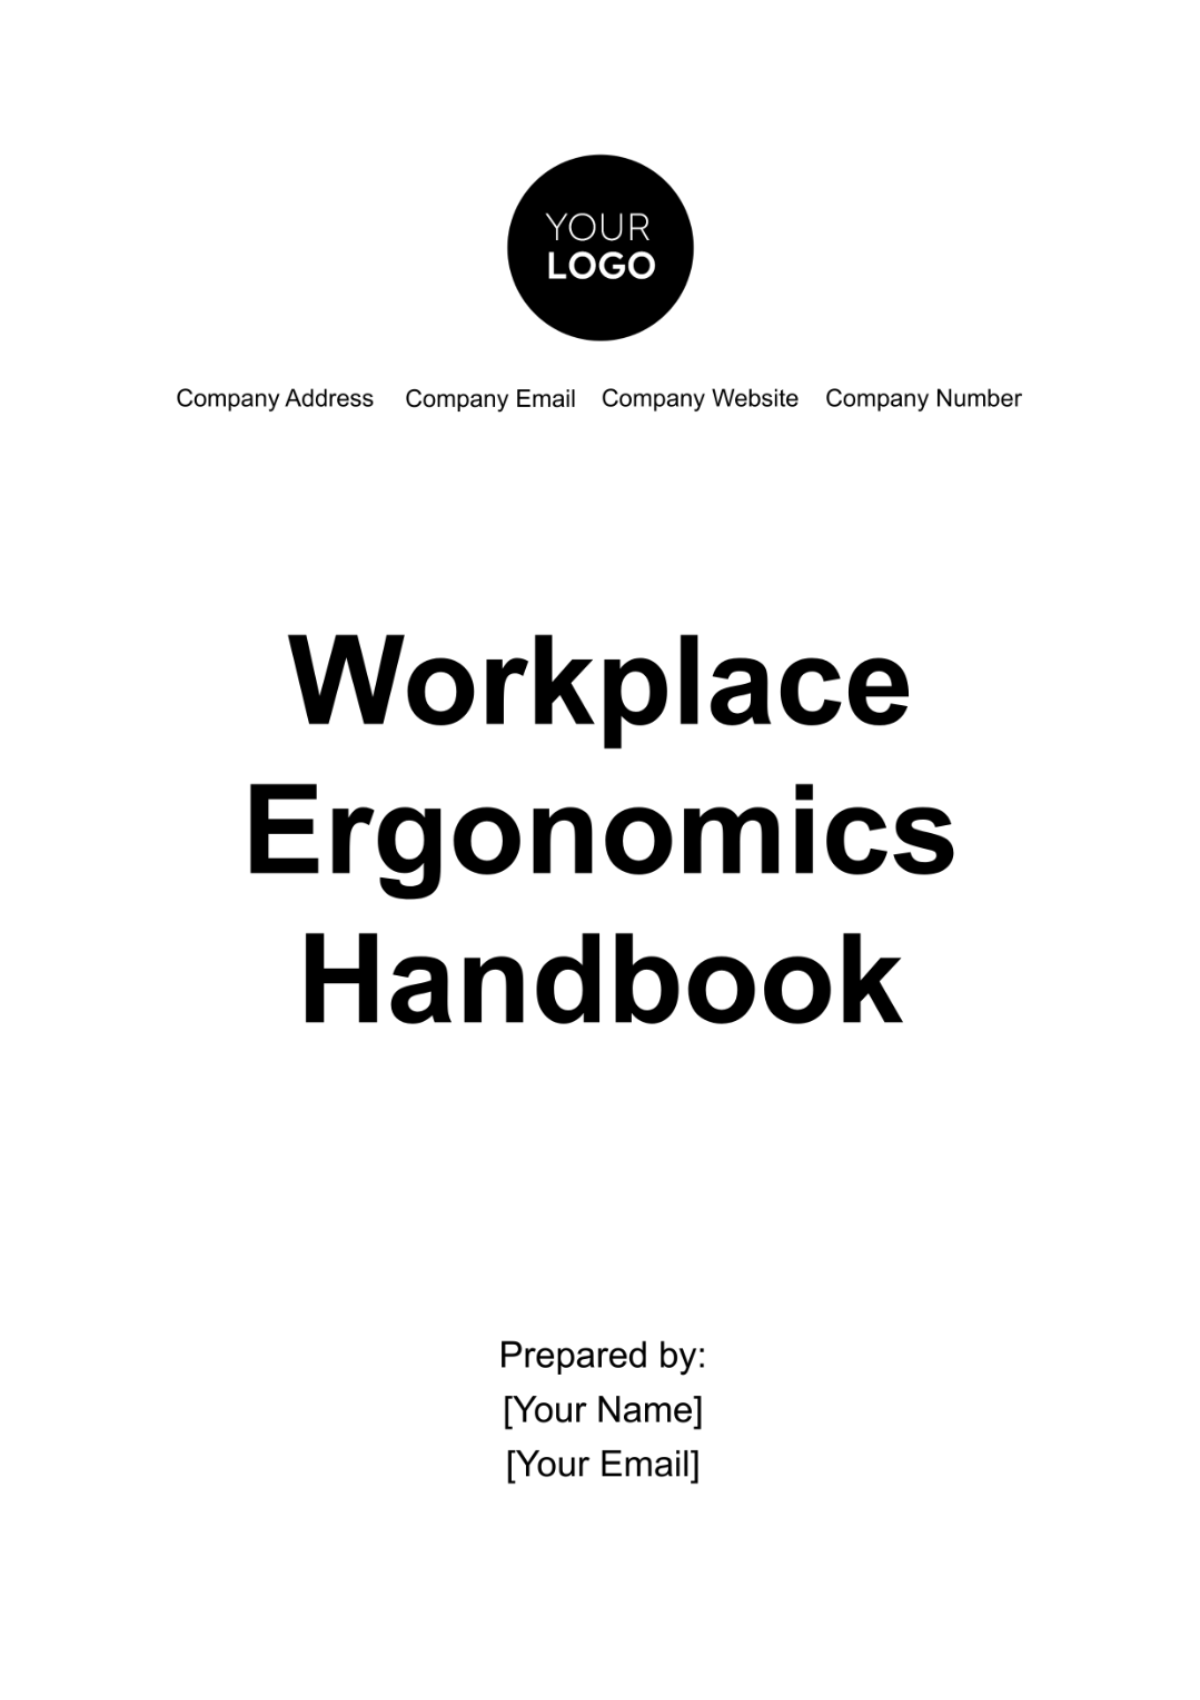 Free Workplace Ergonomics Handbook Template